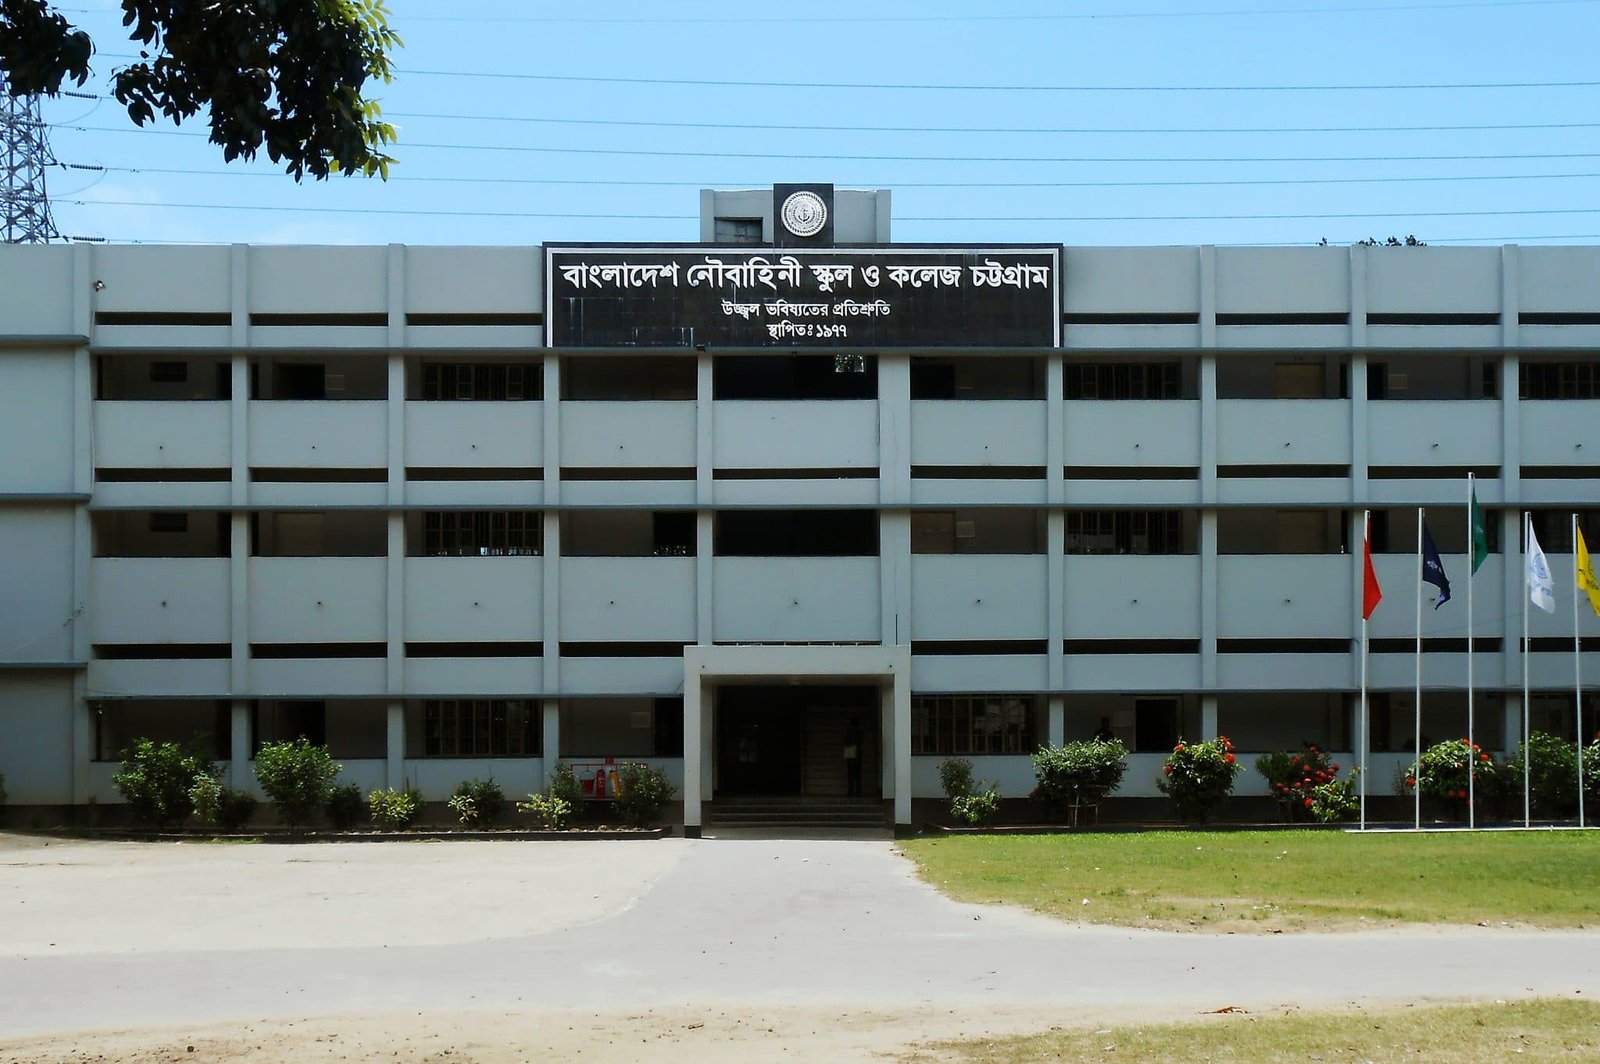 Bangladesh Navy School and College